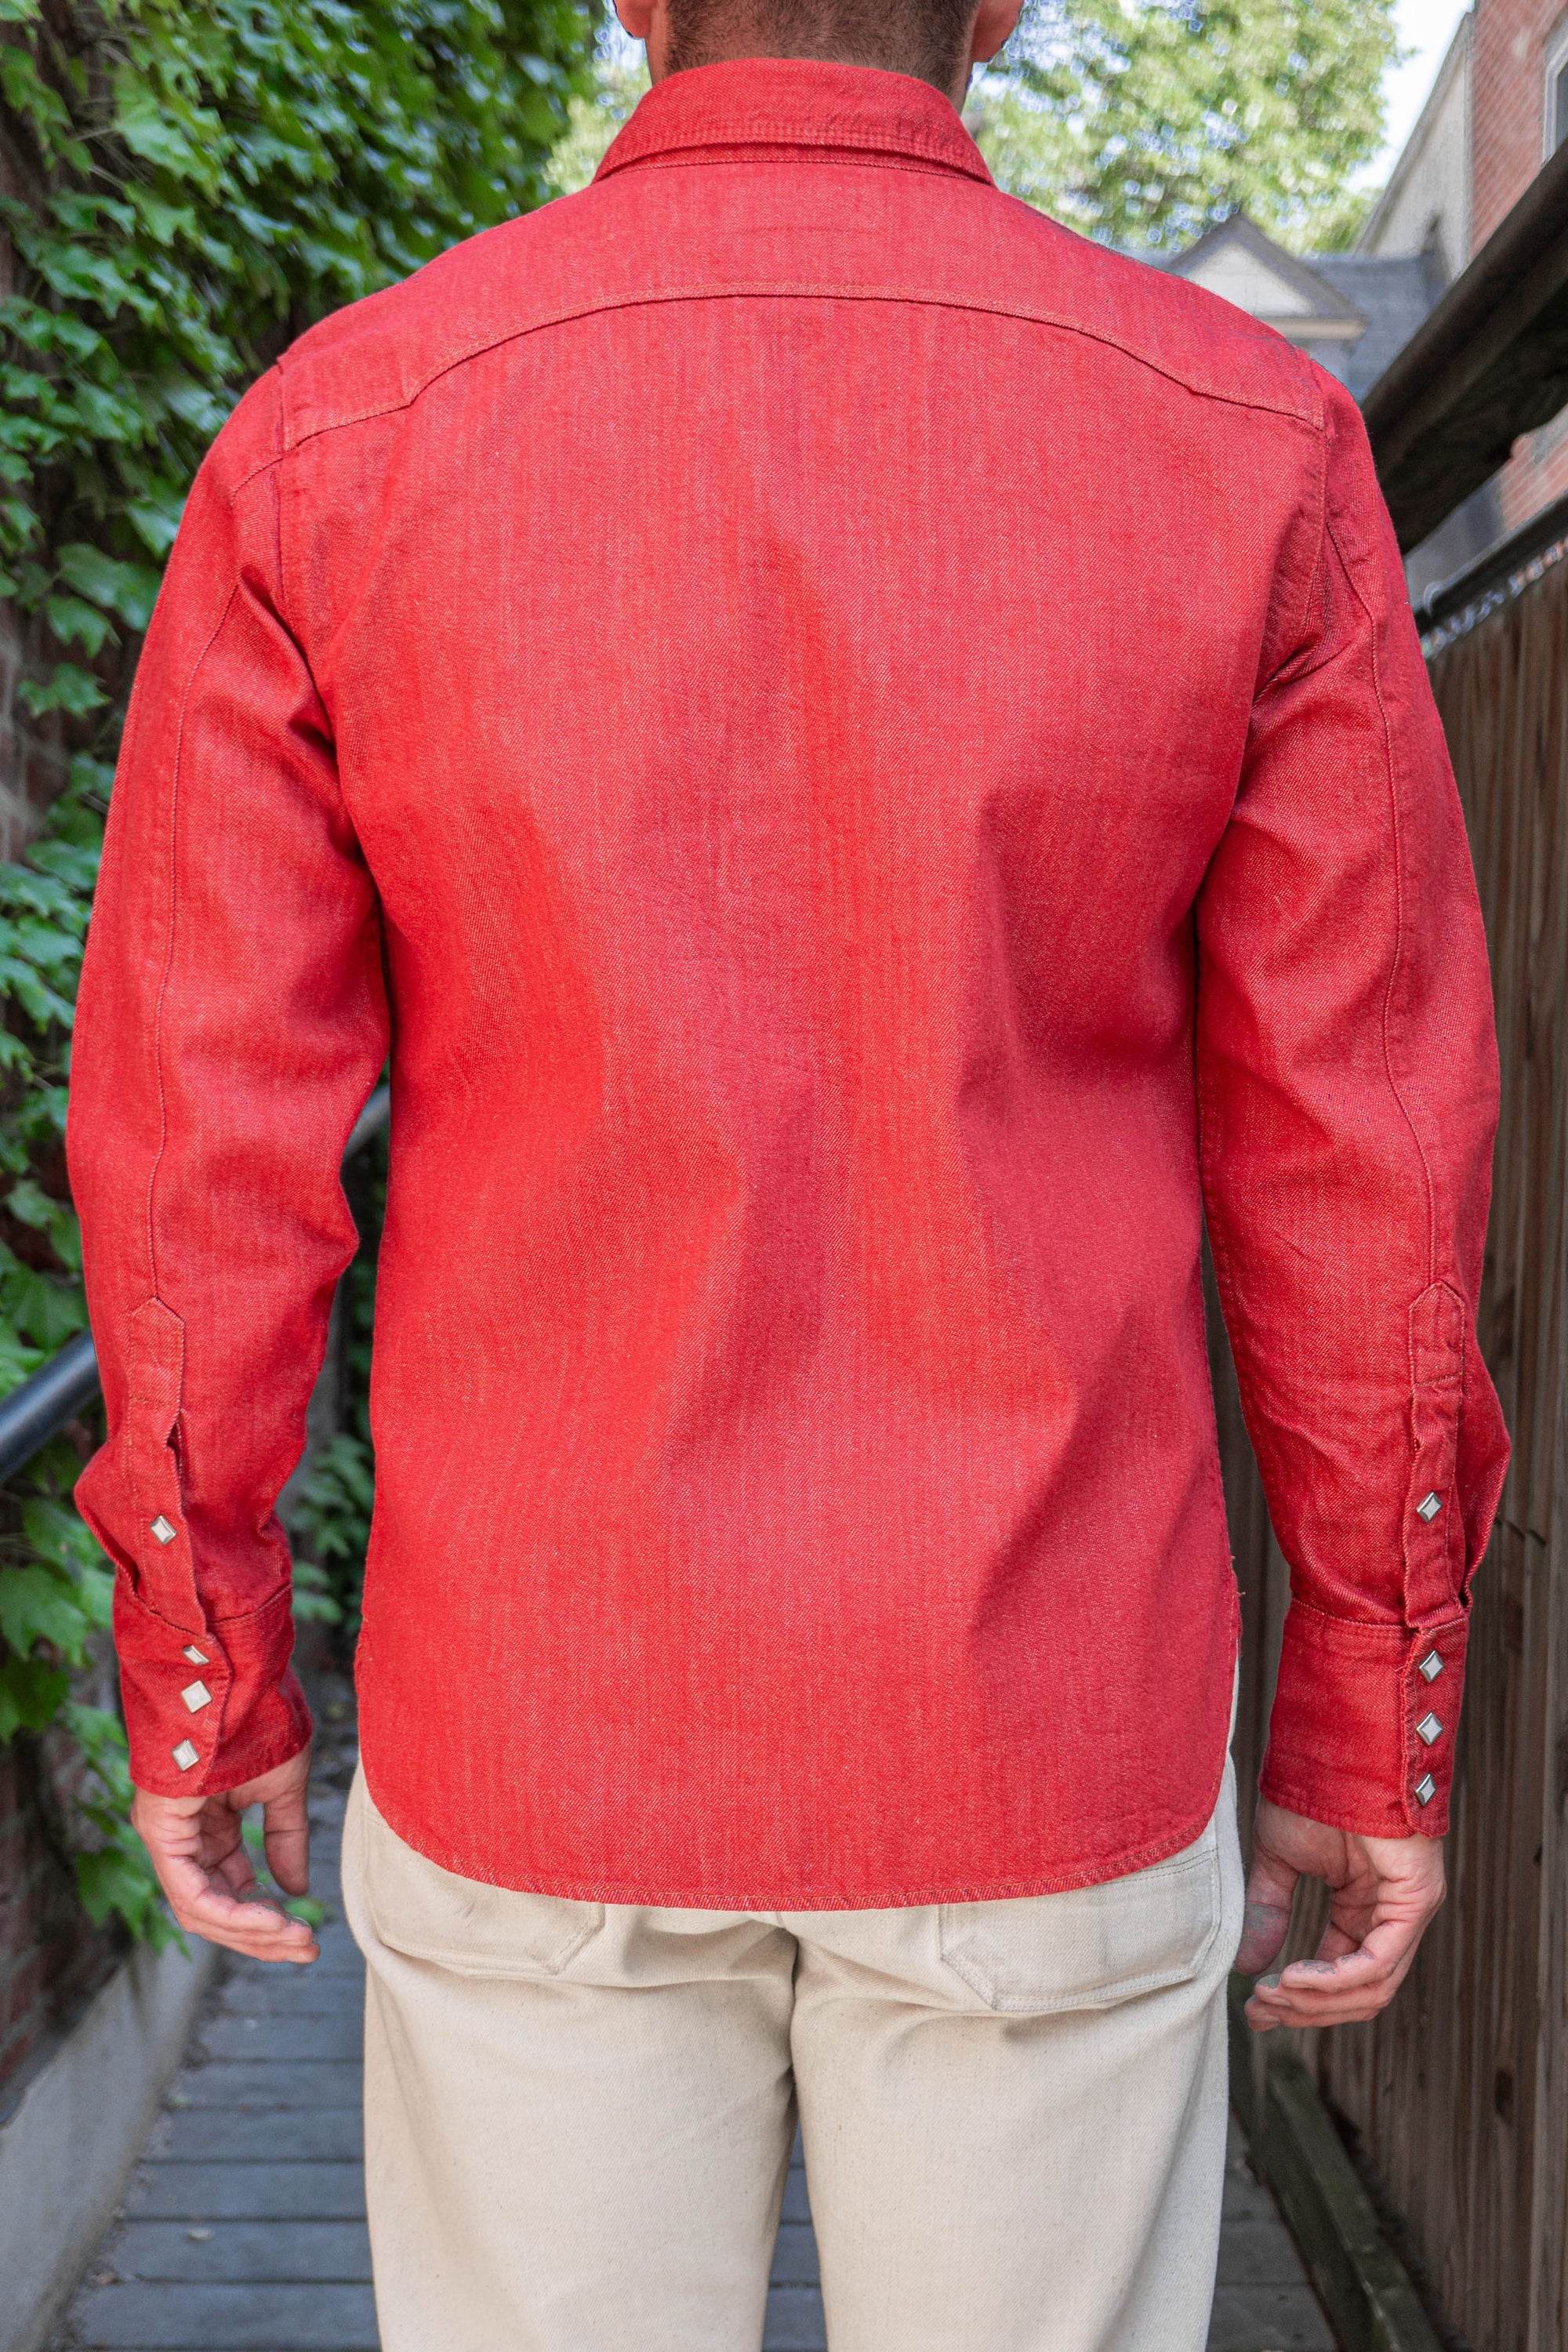 Freenote Cloth Calico - Red Denim